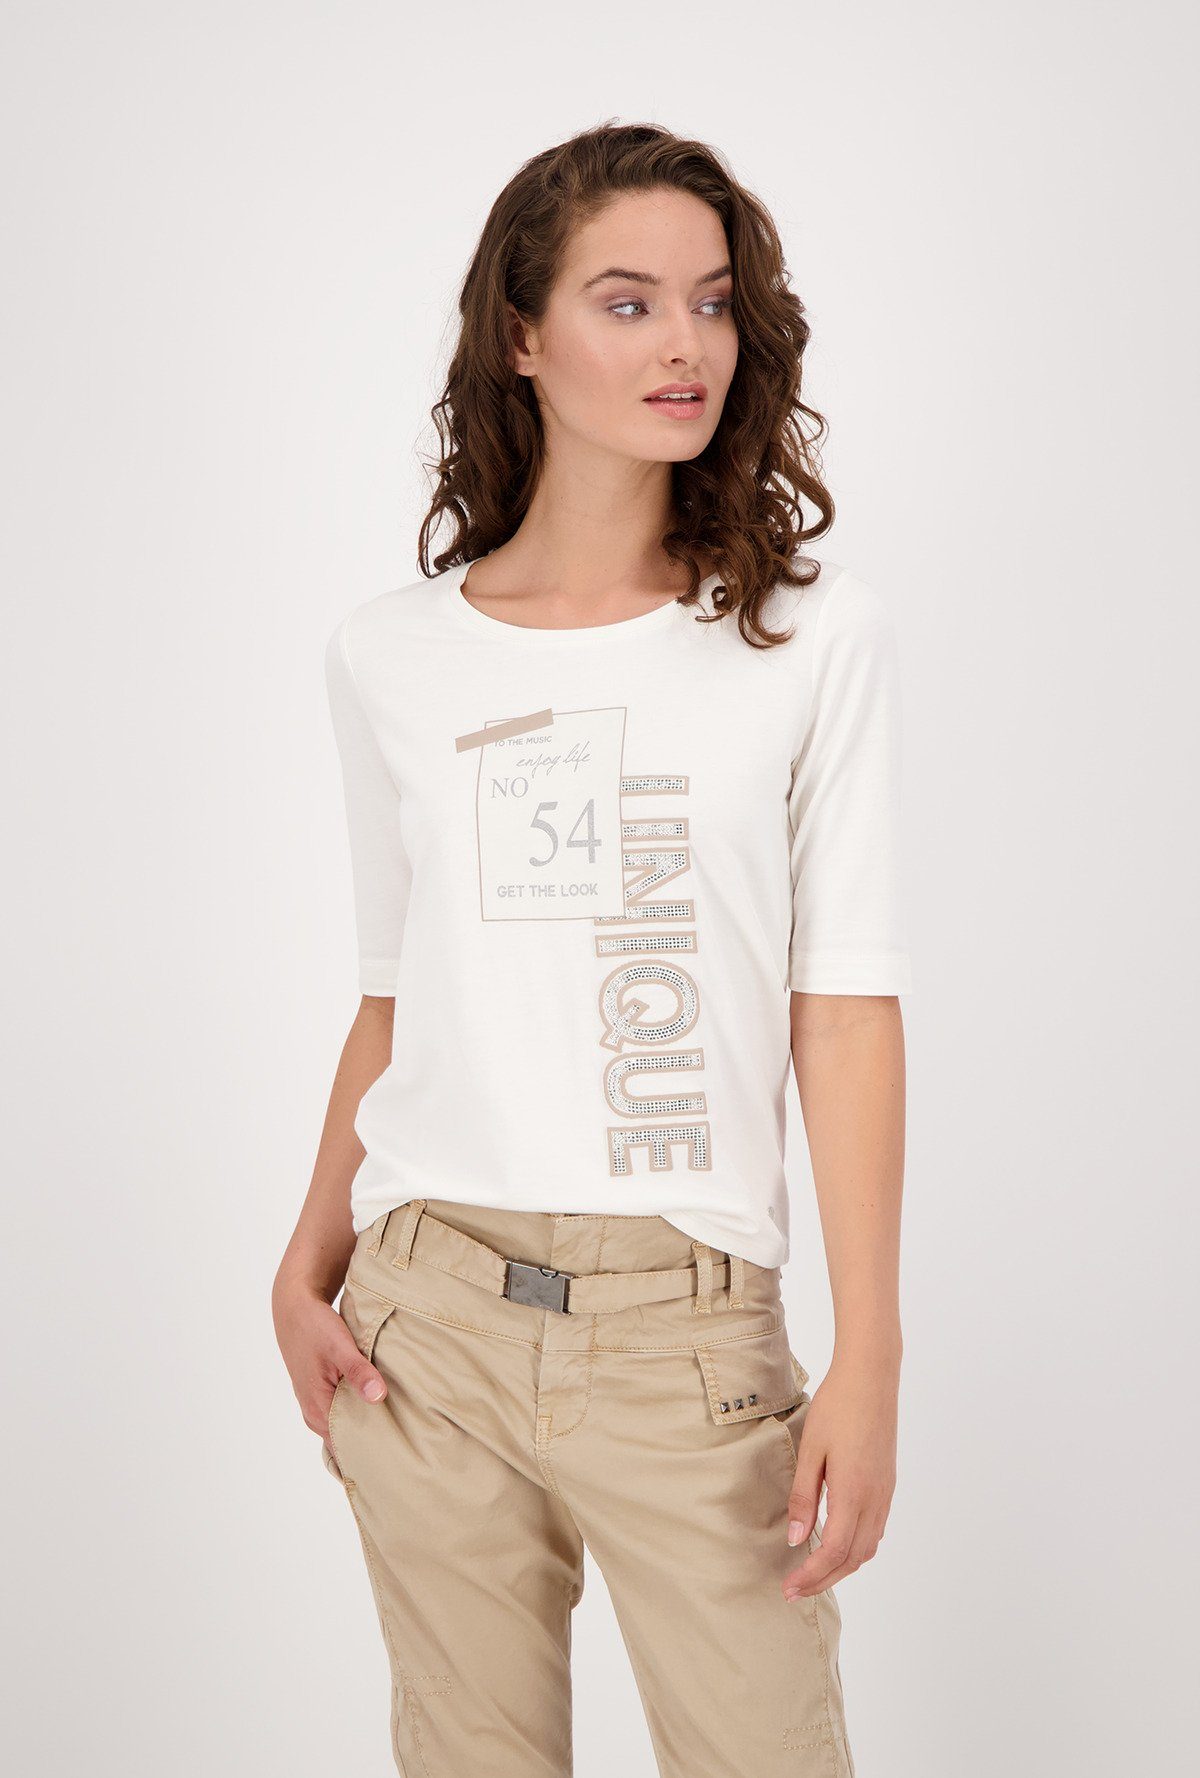 Monari T-Shirt online kaufen | OTTO